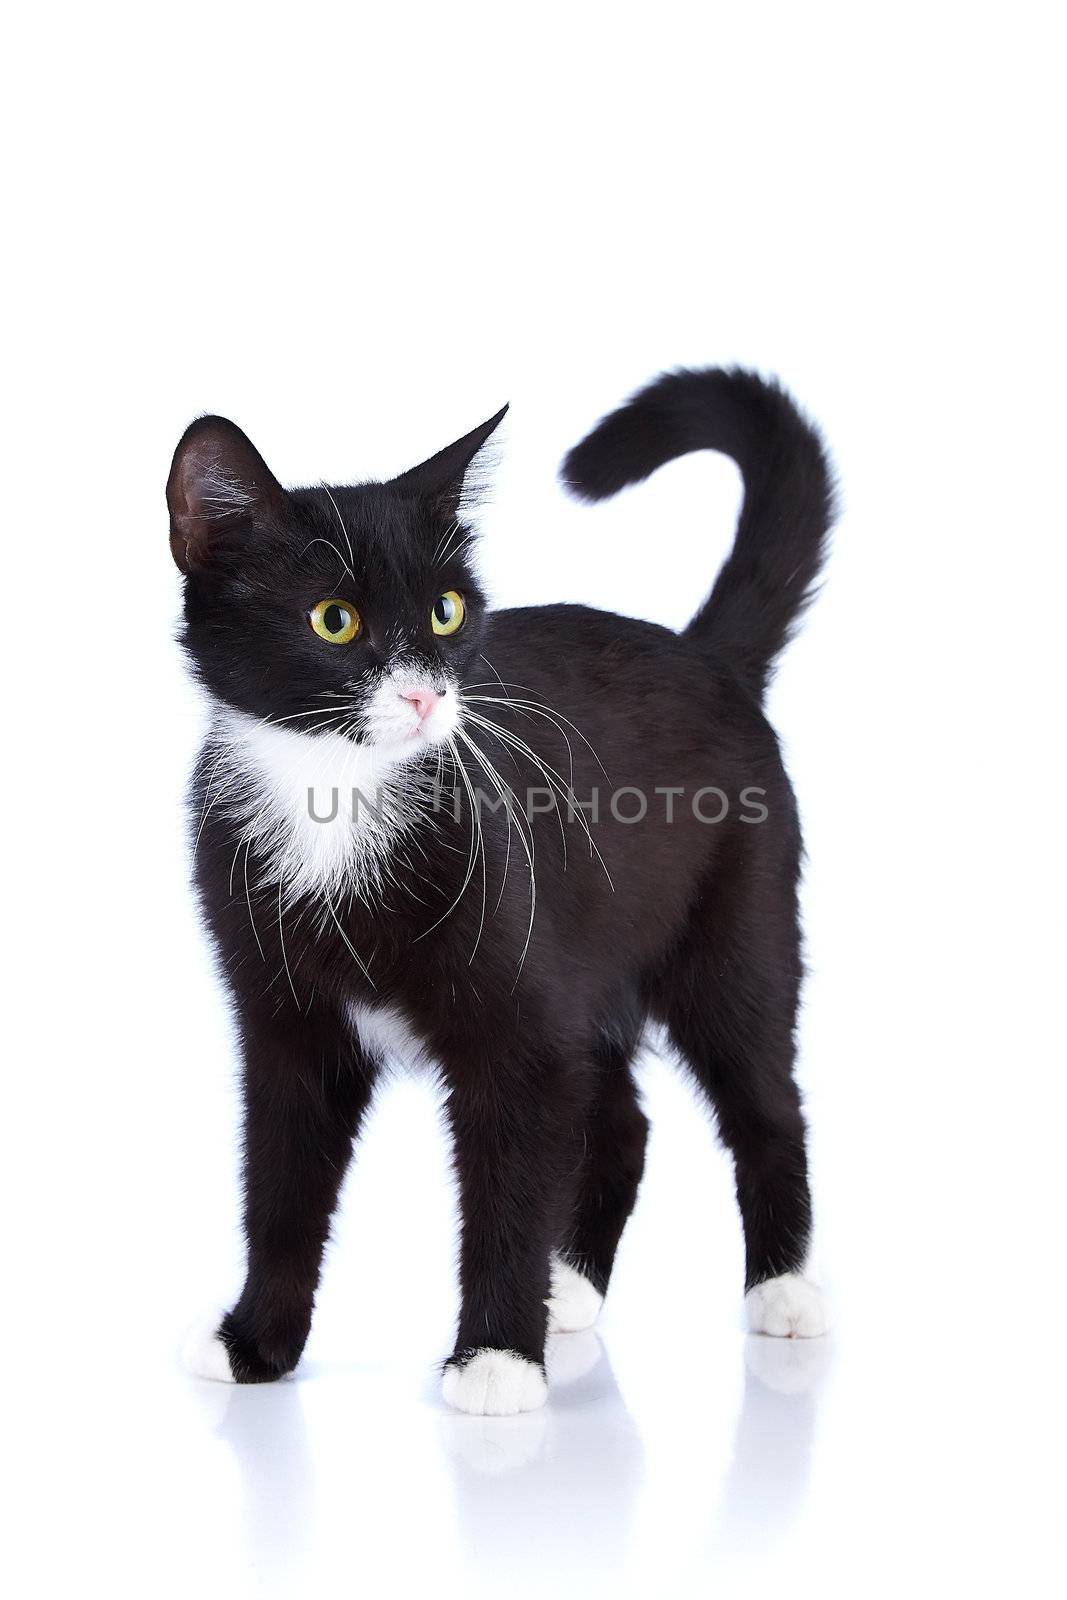 Black-and-white cat. Cat on a white background. Black cat. House predator. Small predatory animal.